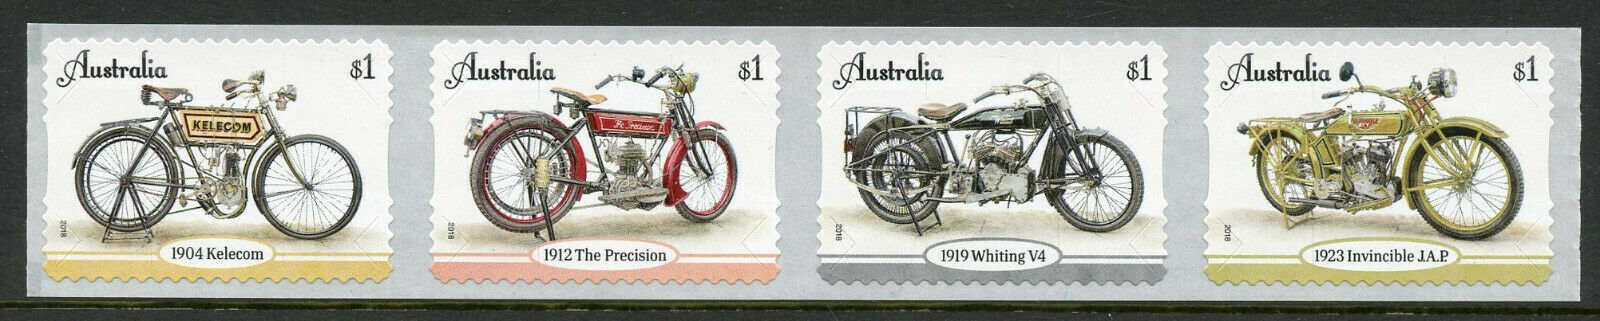 Australia 2018 MNH Vintage Motorcycles Kelecom Whiting V4 4v S/A Motoring Stamps